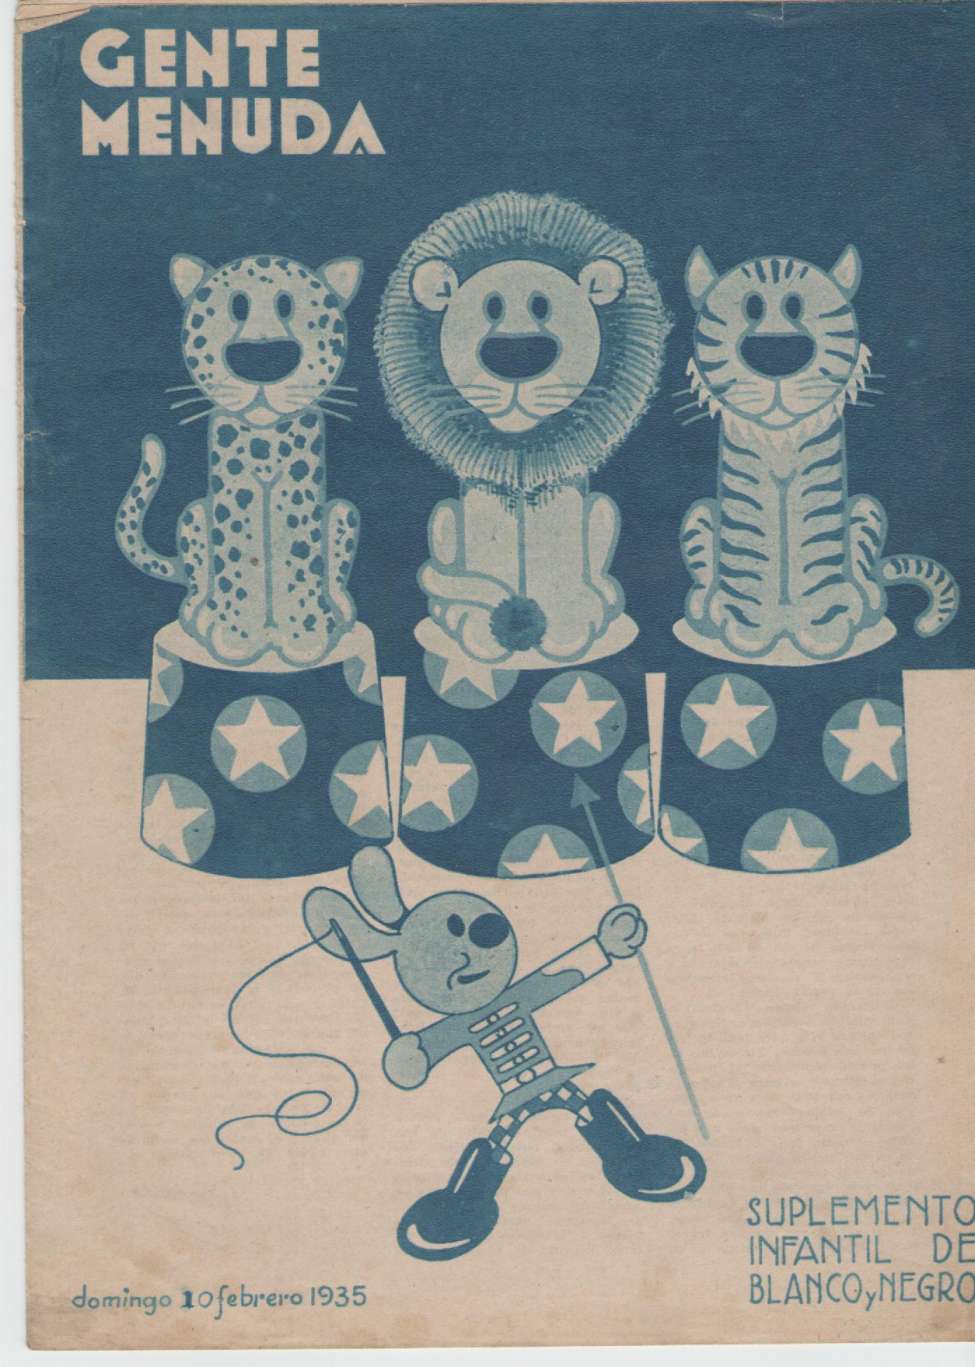 Comic Book Cover For Gente Menuda (1935-02-10)